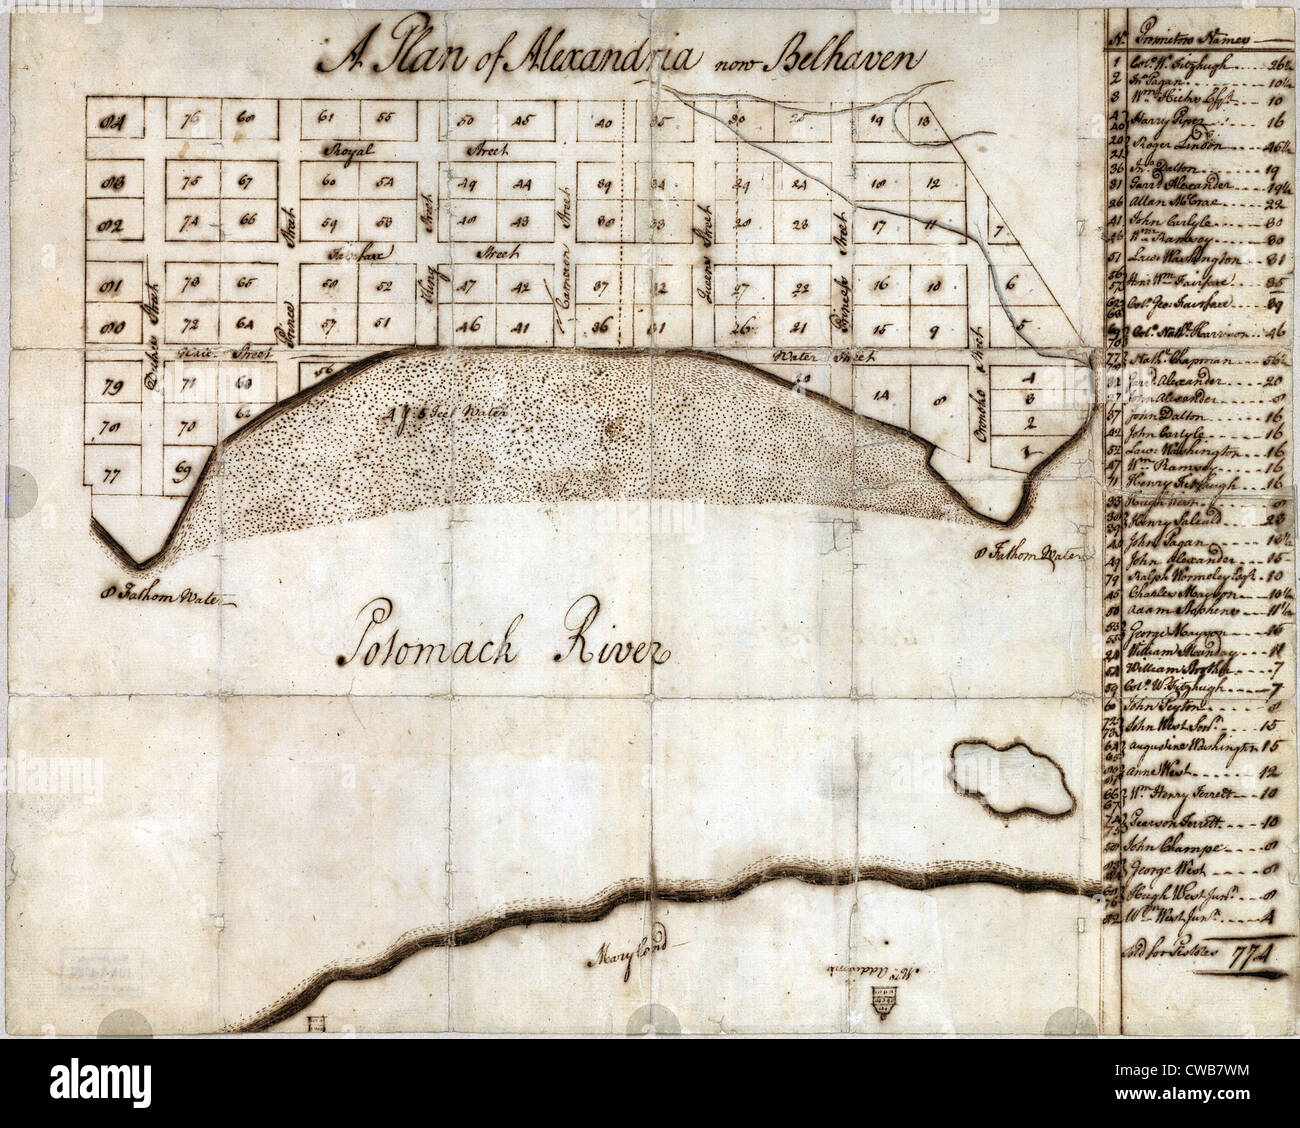 A plan of Alexandria, now Belhaven, Virginia. Surveyed and drawn by George Washington, 1749 Stock Photo